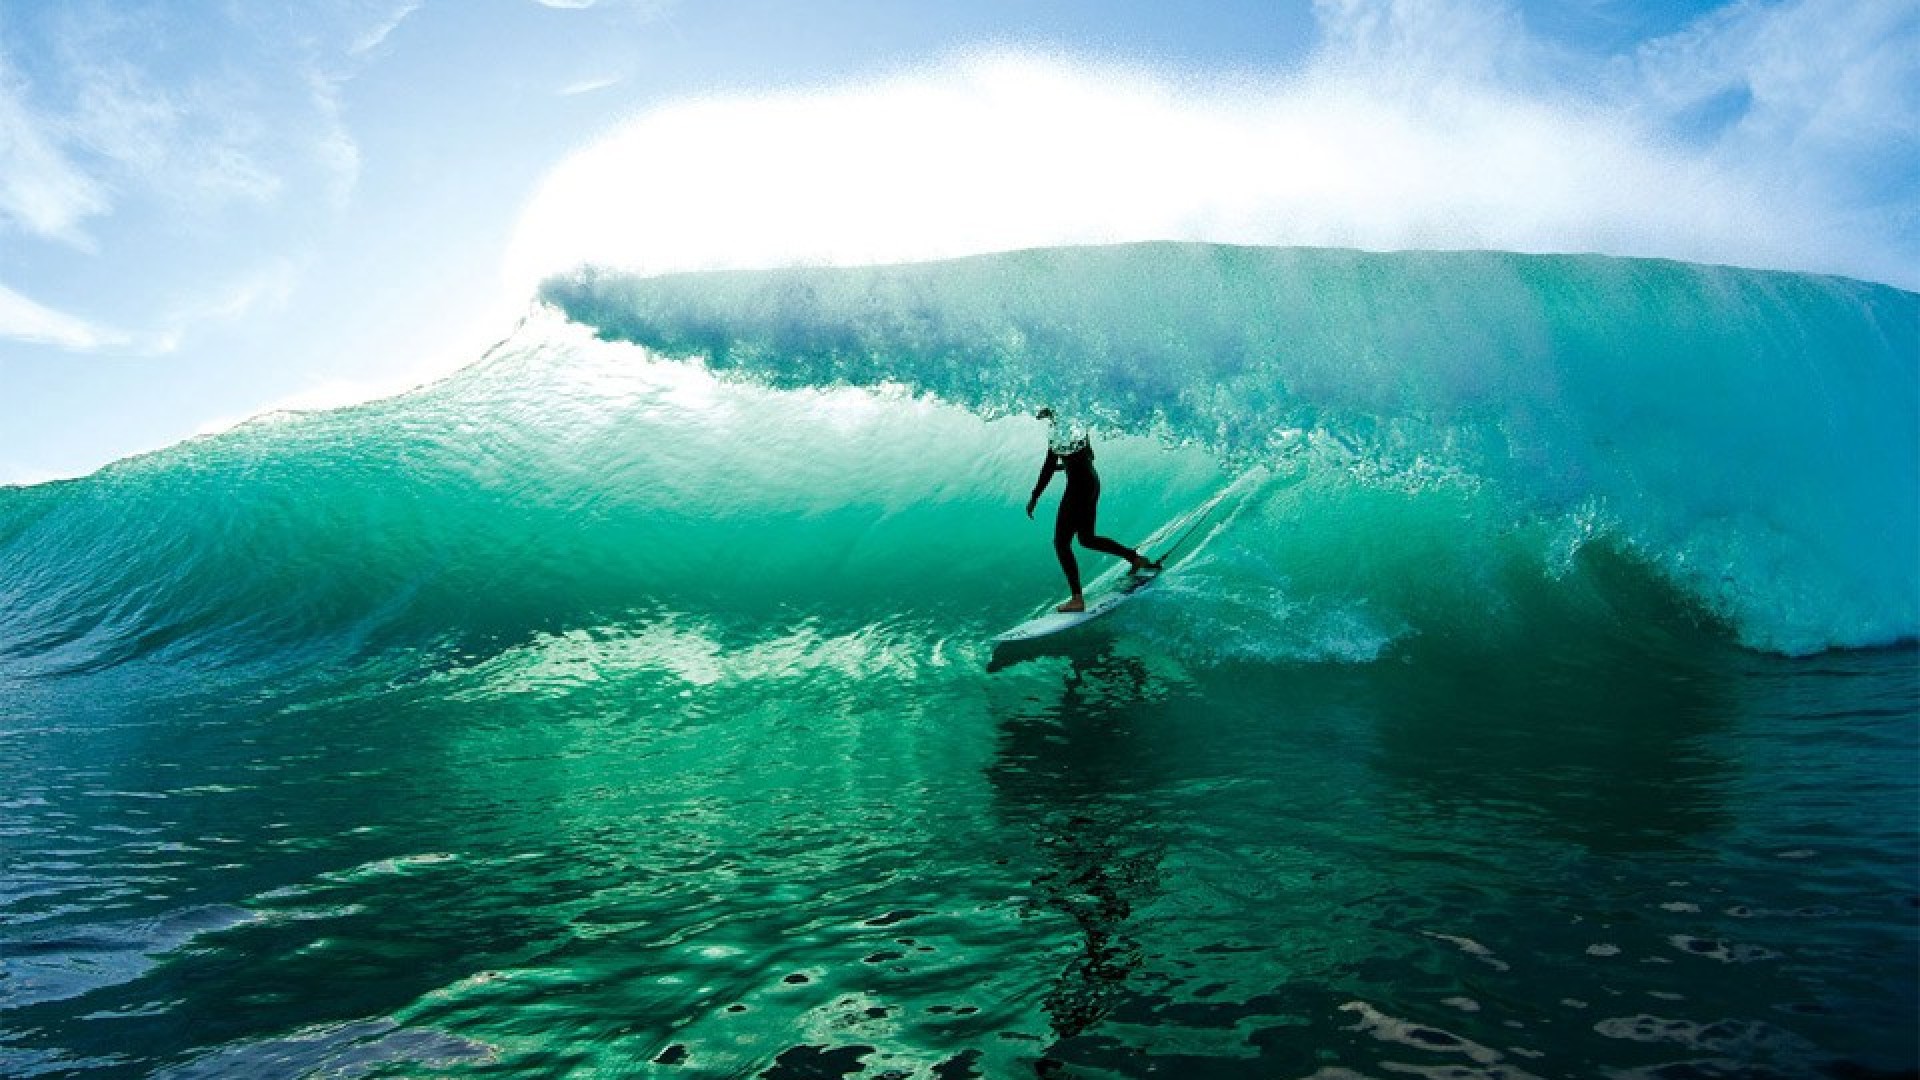 Background Wallpaper HD 1080p High Resolution Widescreen Surfing